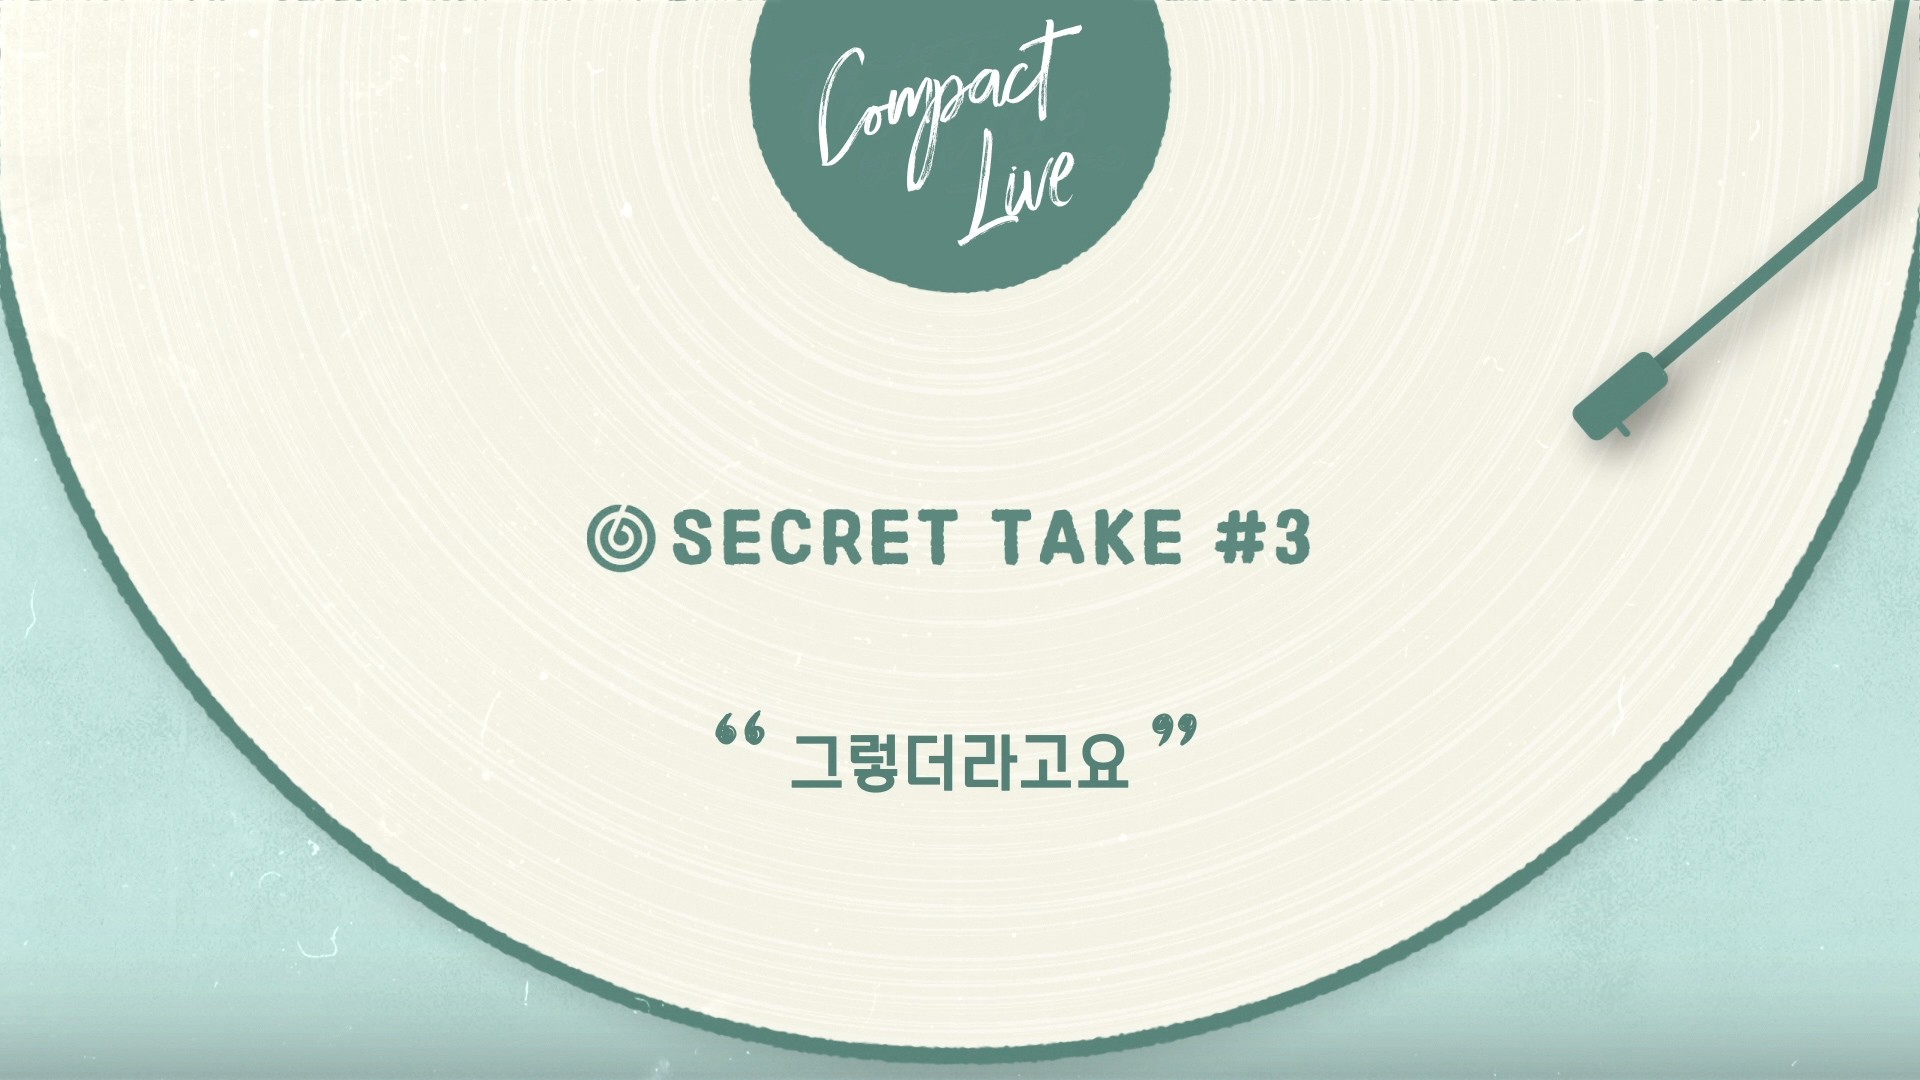 [Compact Live] SECRET TAKE #3 DAY6 "그렇더라고요"